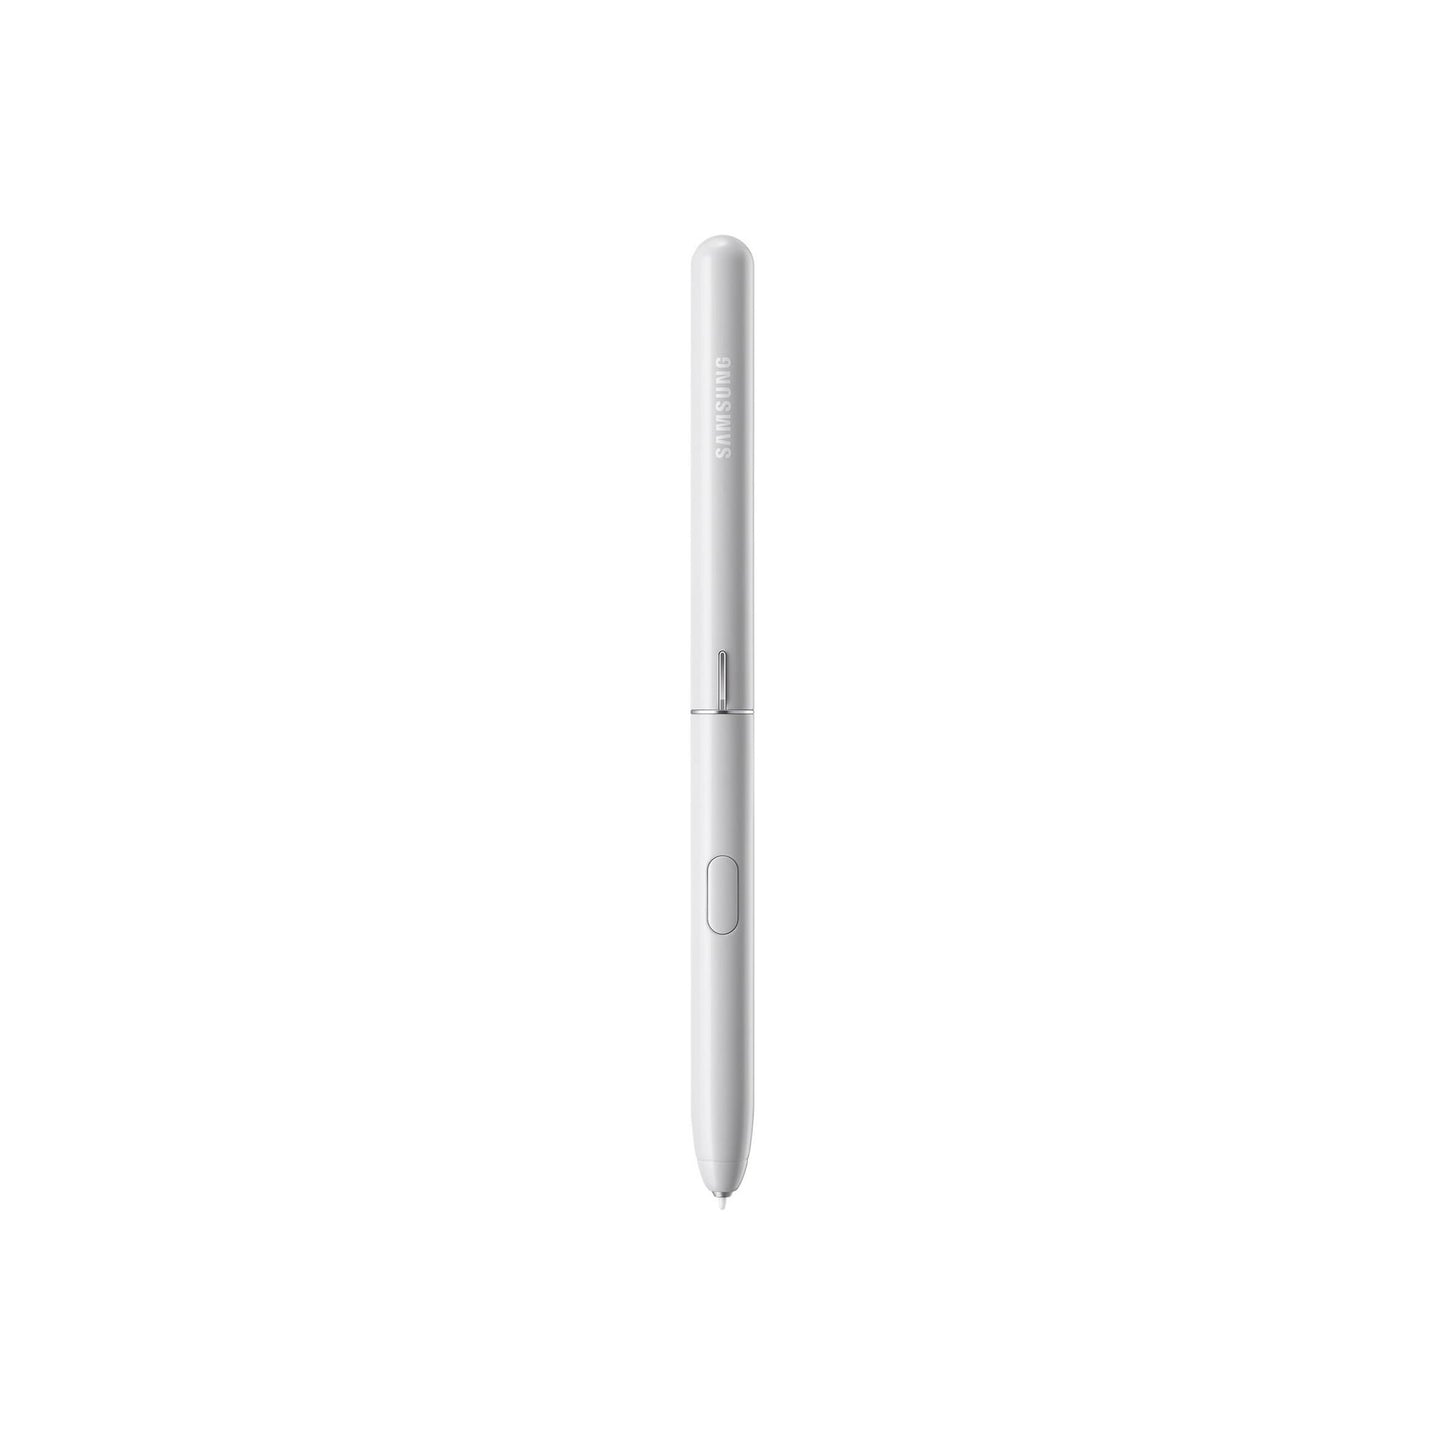 Samsung Galaxy Tab S4 10.5" 64GB Tablet w/ S Pen - SM-T830NZAAXAR